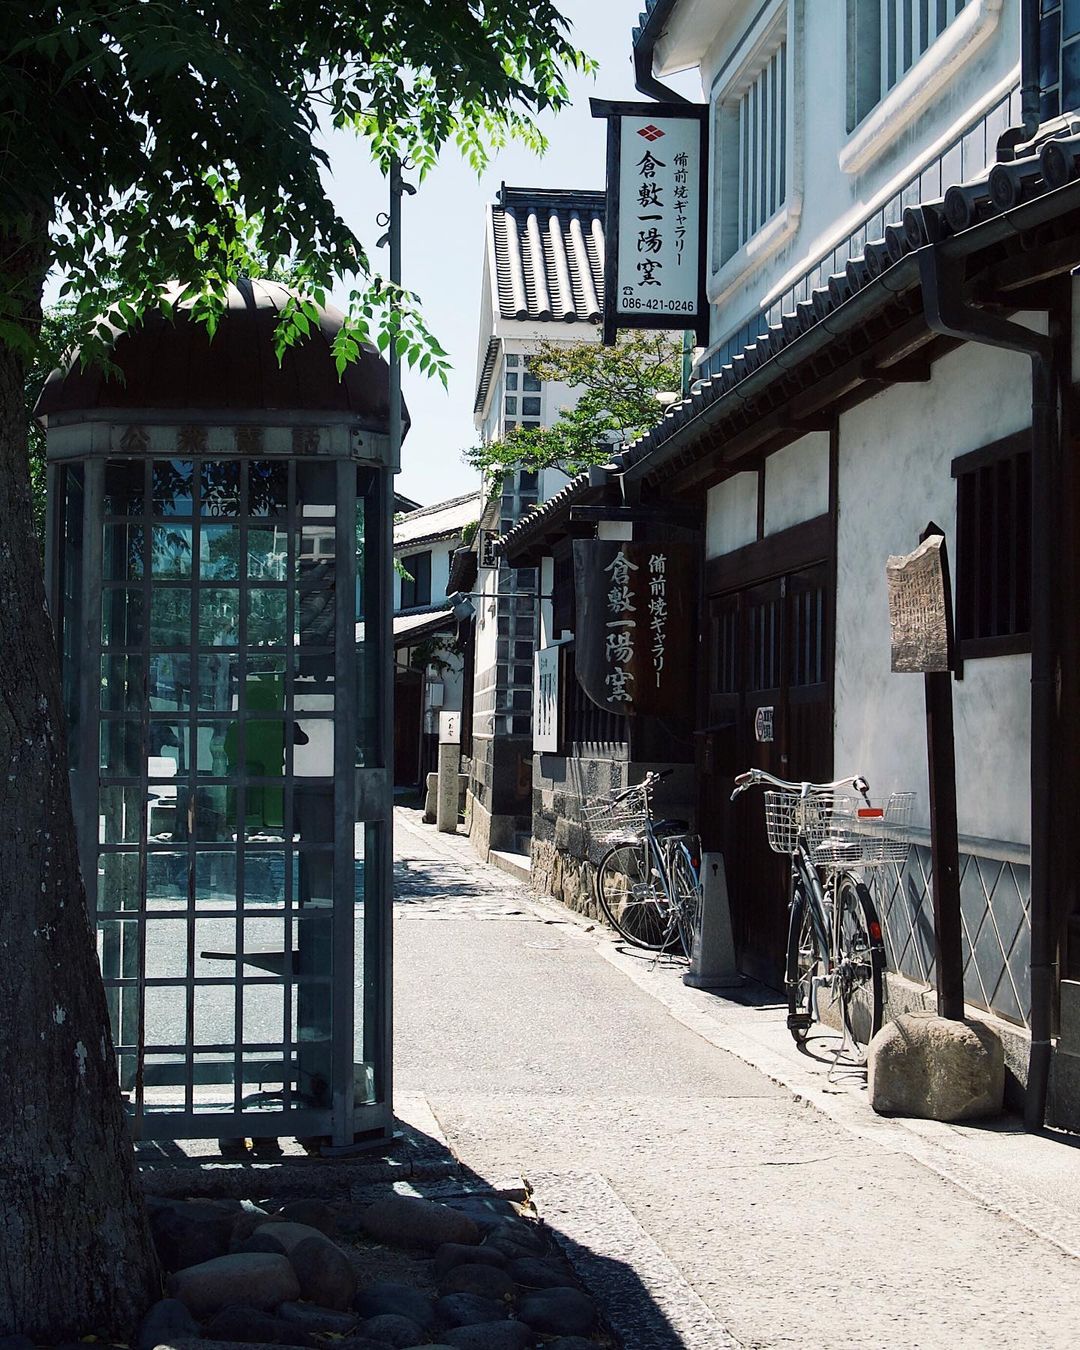 Kurashiki Bikan Historical Quarter - alley